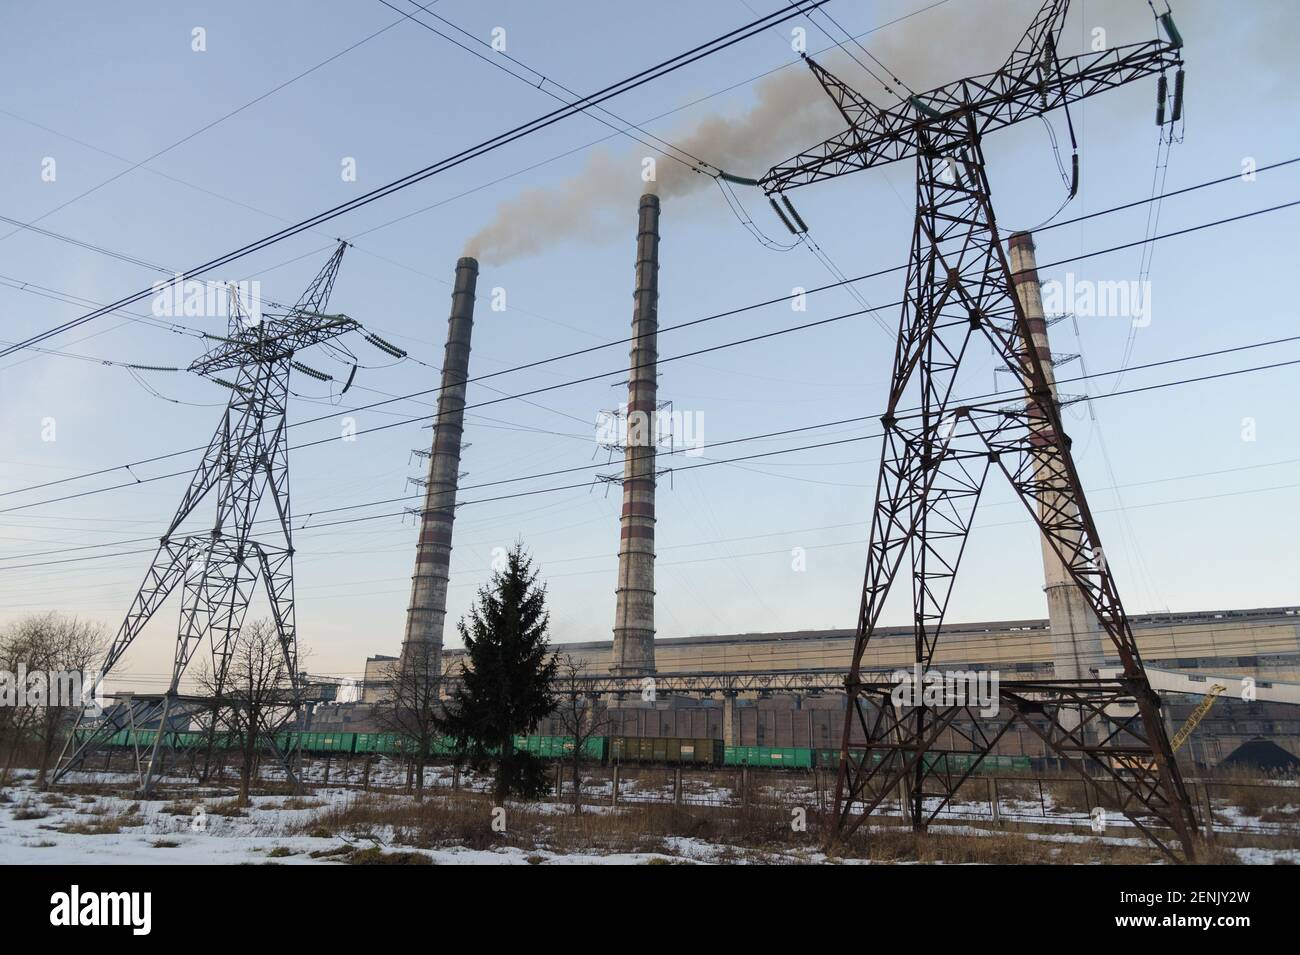 Plume of smoke rise above the chimney of the Burshtyn Thermal Power Plant, Ivano-Frankivsk Region, in western Ukraine. Stock Photo